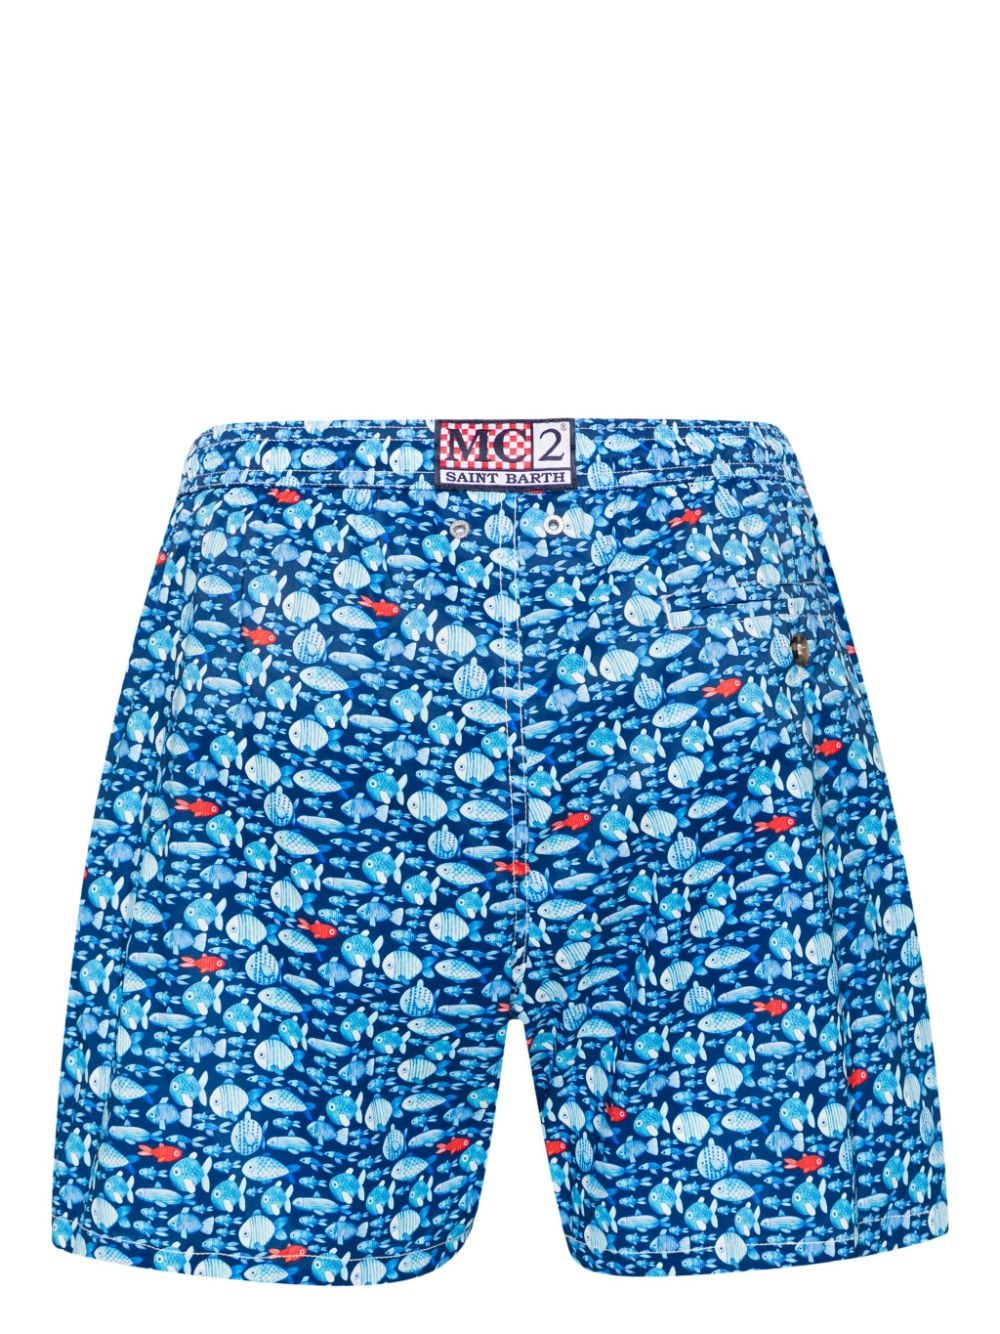 Fish-print swim shorts<BR/><BR/><BR/>